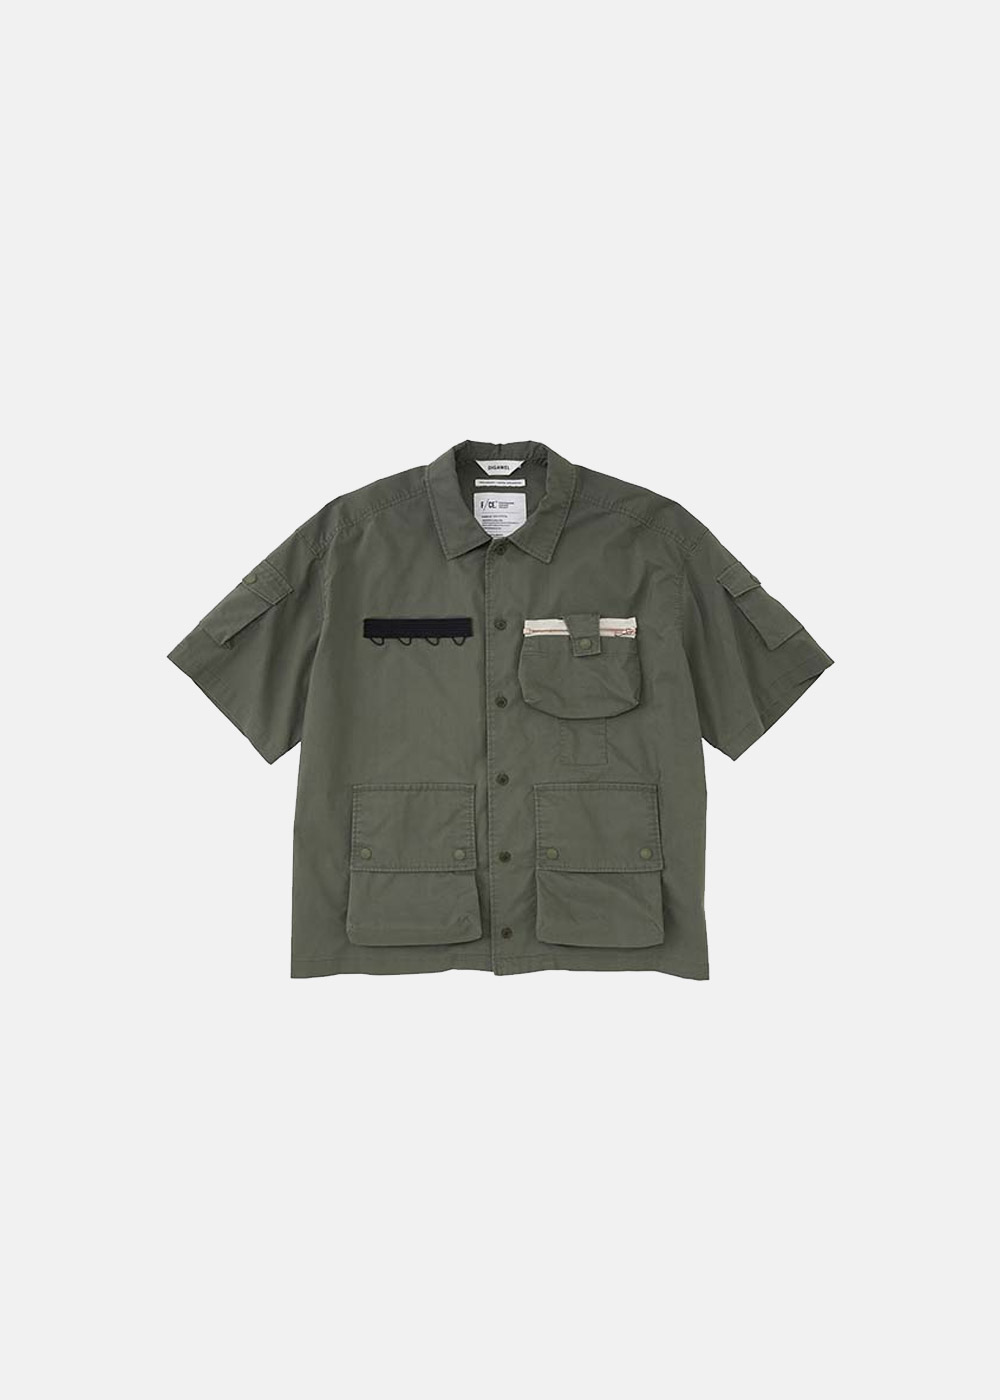 7 Pockets S/S Shirt (Olive)